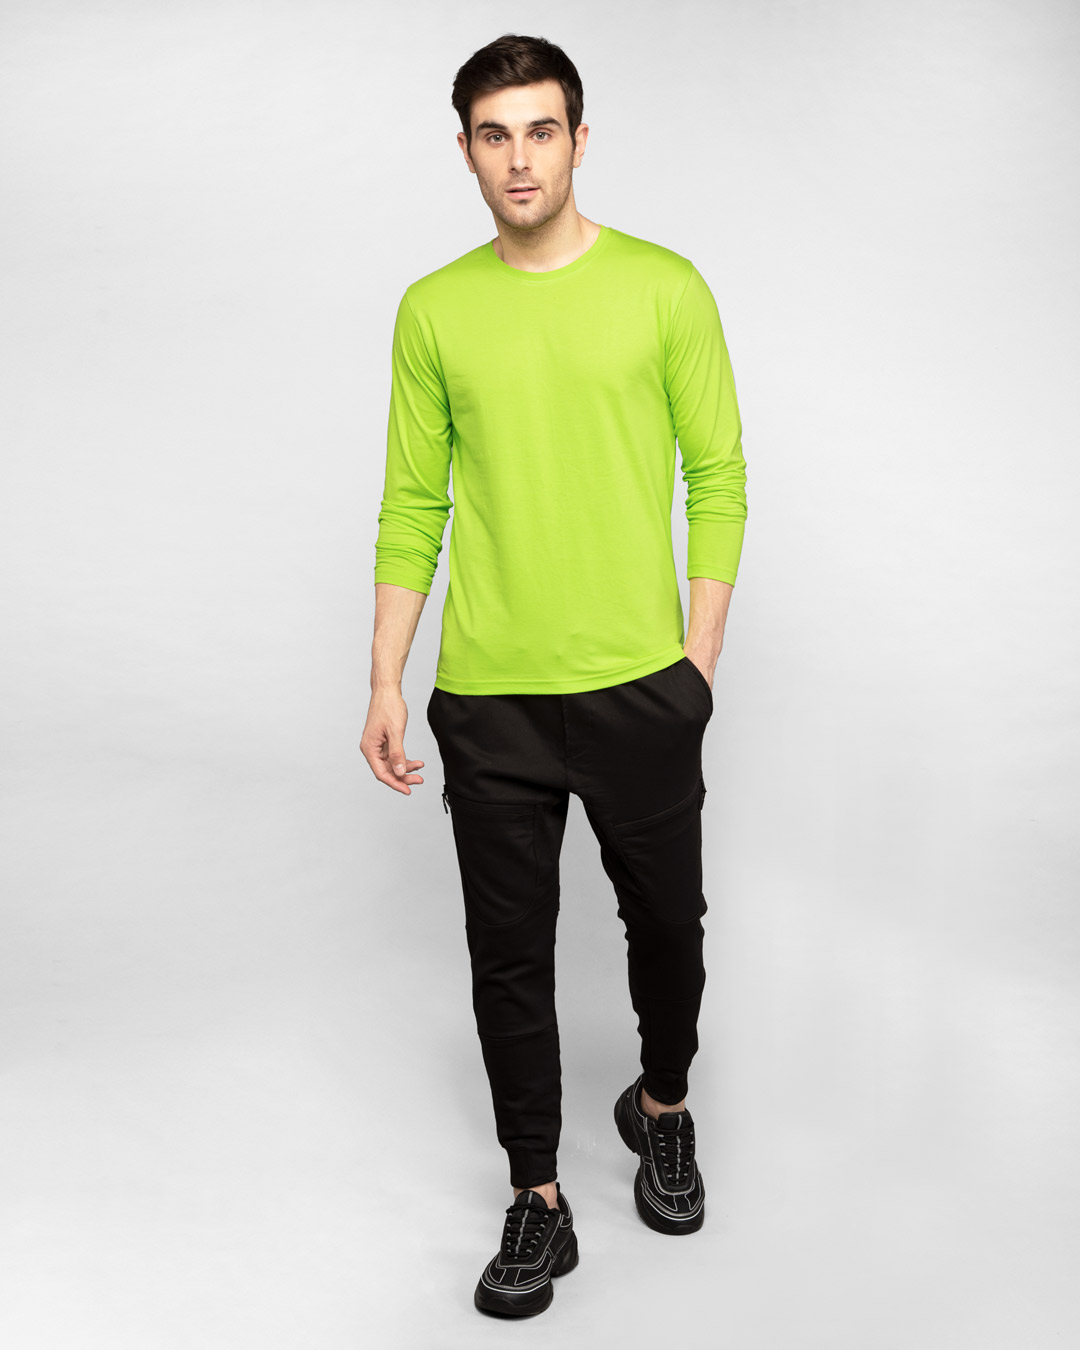 neon shirts online india